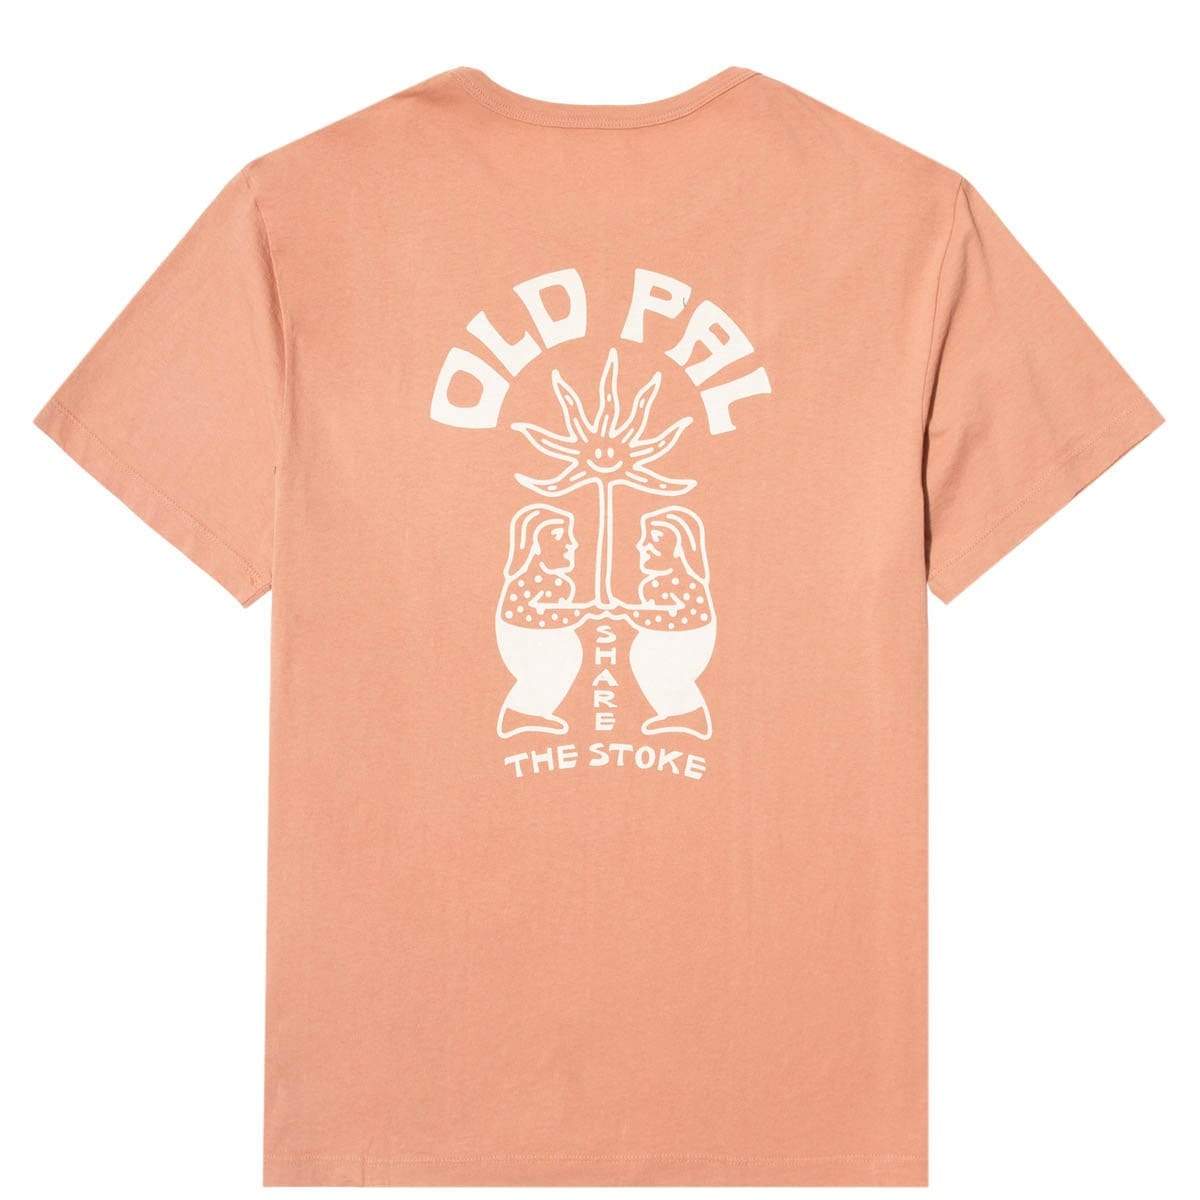 Old Pal Provisions T-Shirts SHARE THE STOKE POCKET SHIRT